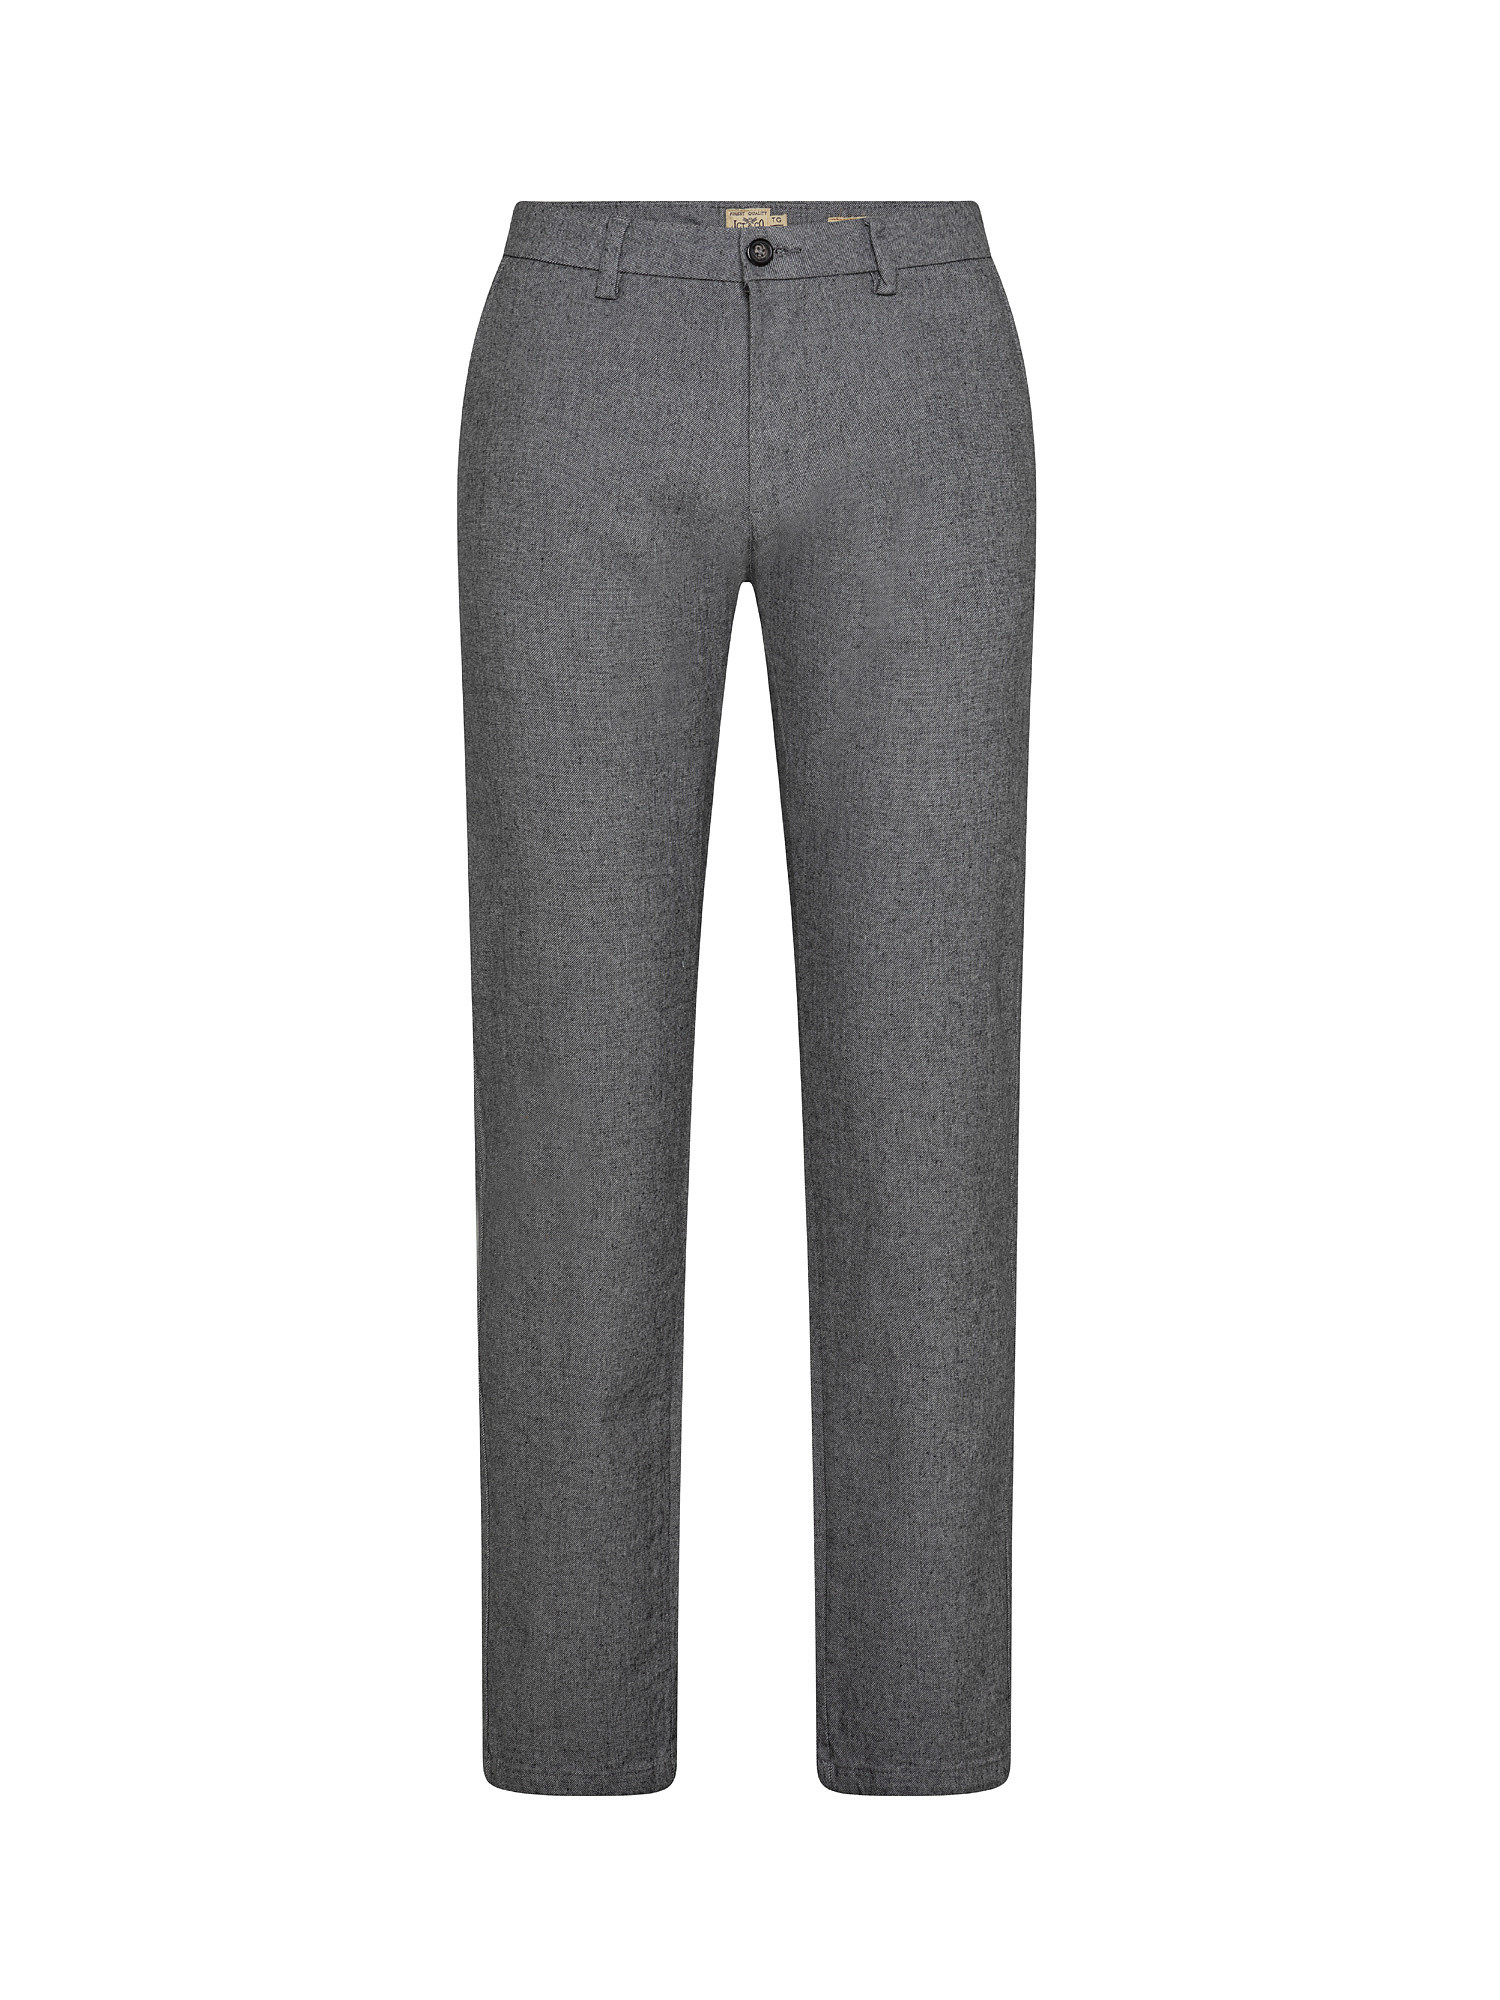 Chino pants, Grey, large image number 0